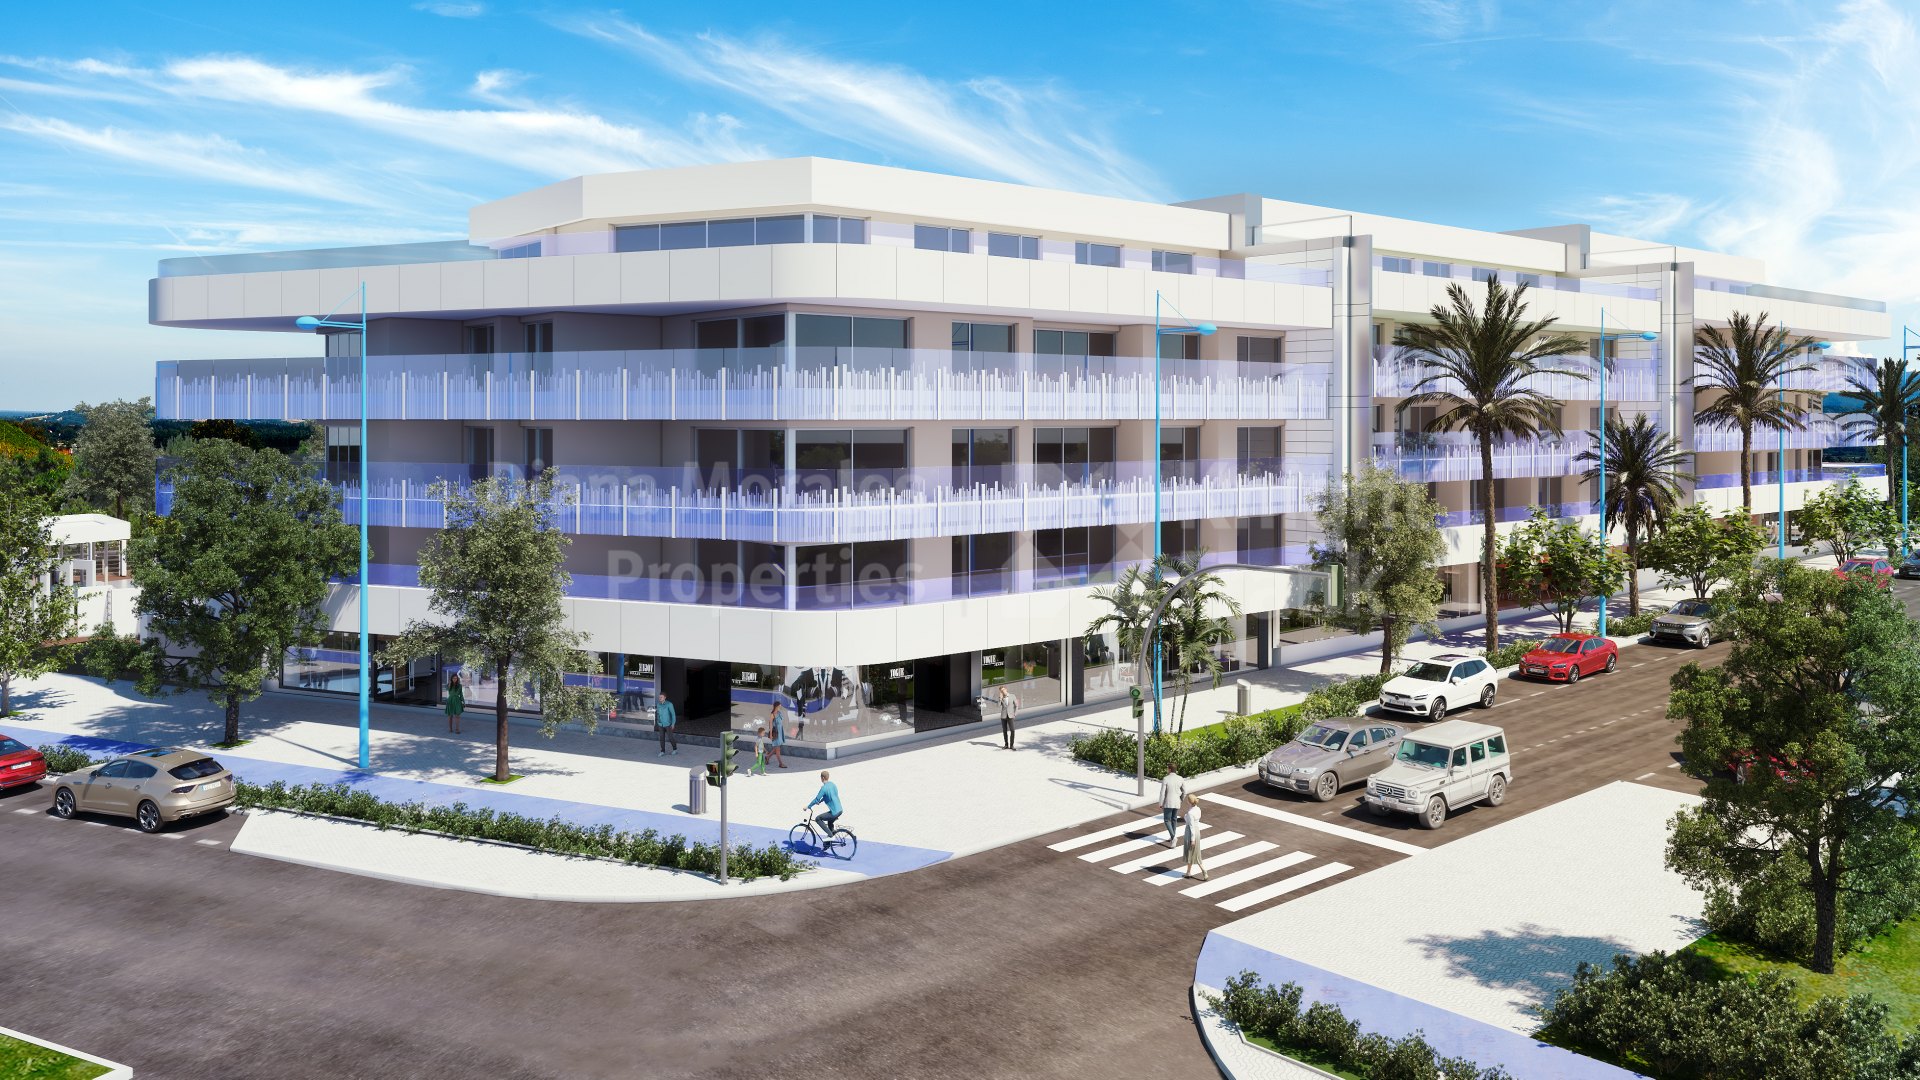 Terra, a new complex of apartments near the beach